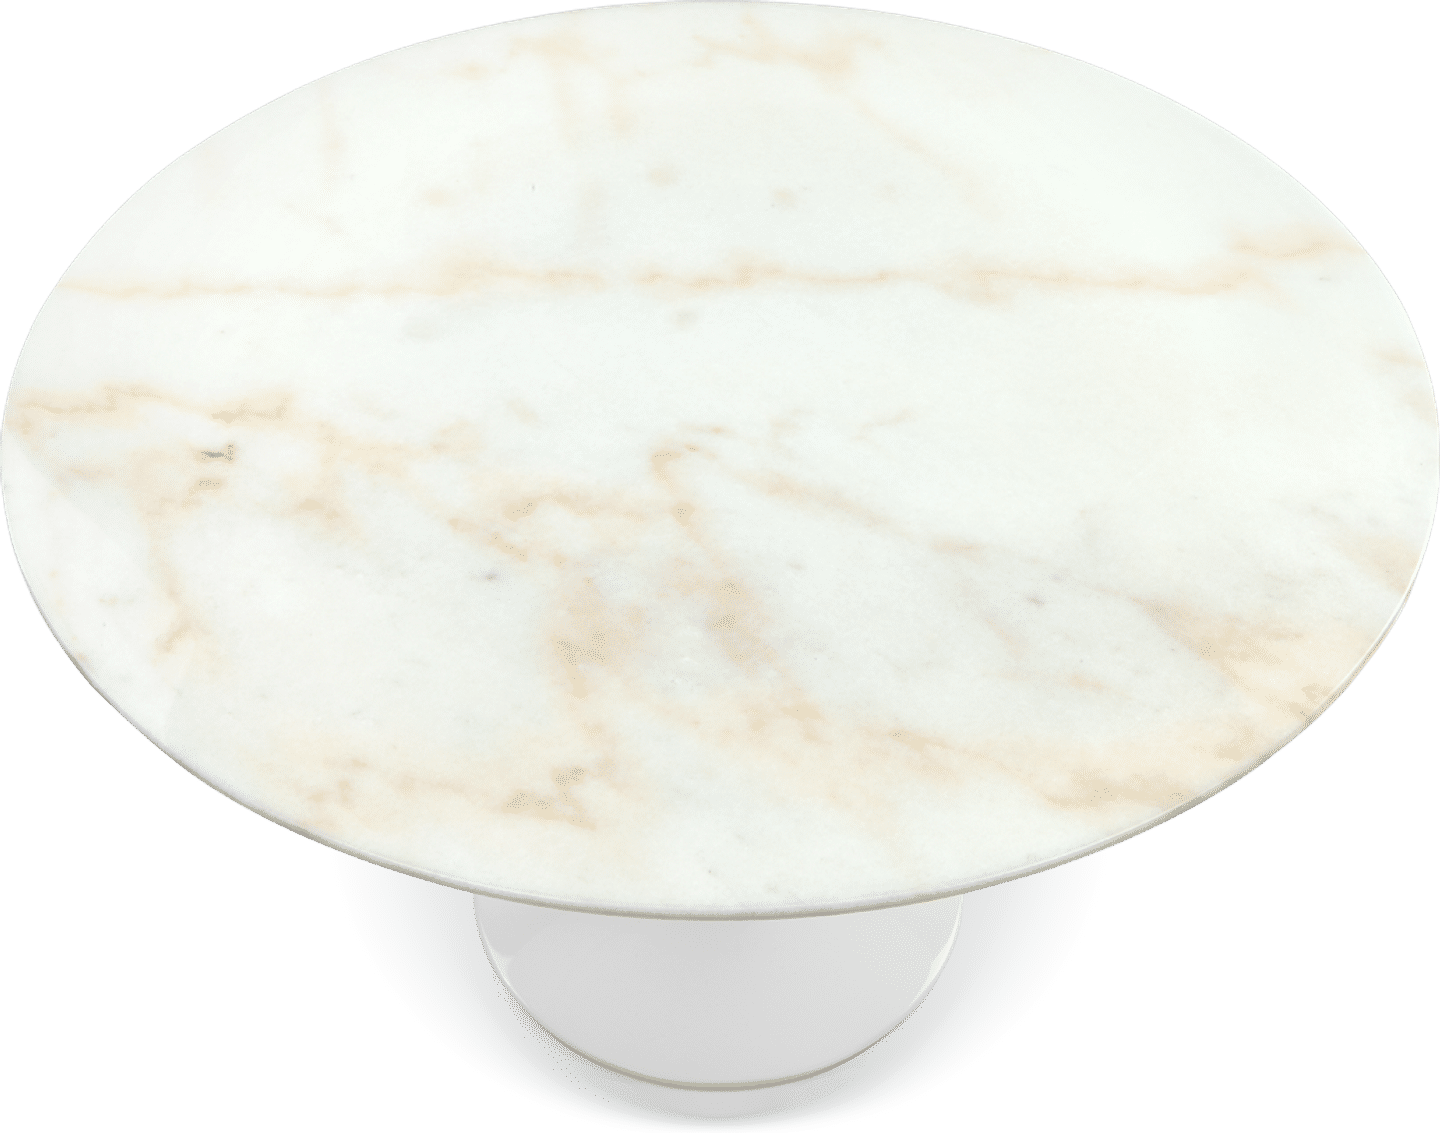 Tulipan rundt spisebord - hvit marmor White Marble/90 CM image.